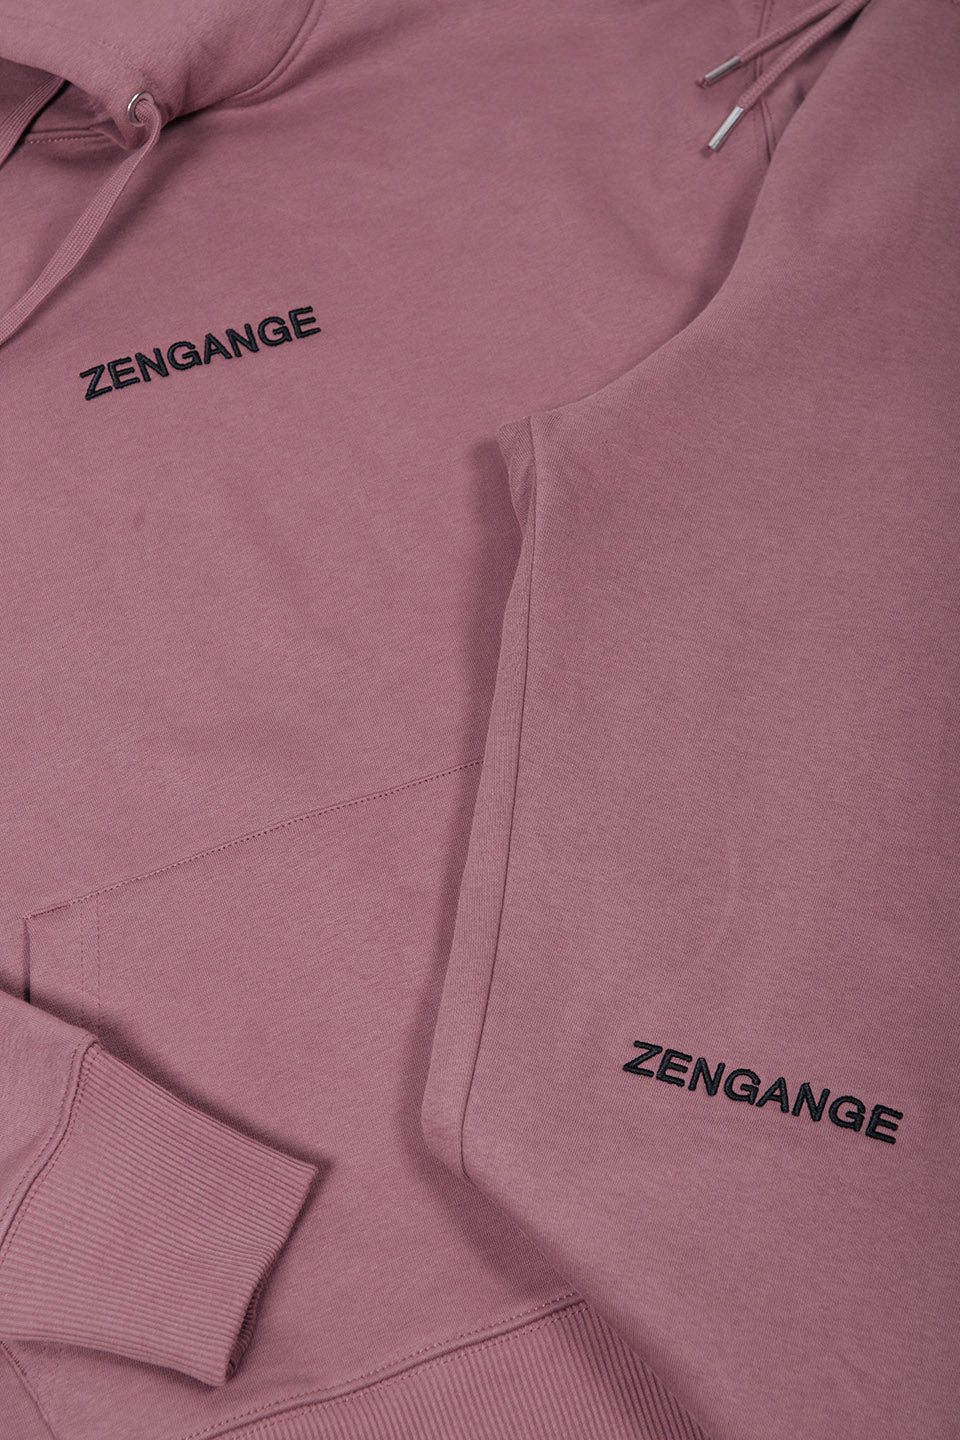 Zengange premium – Magenta Brown tracksuit with shirt